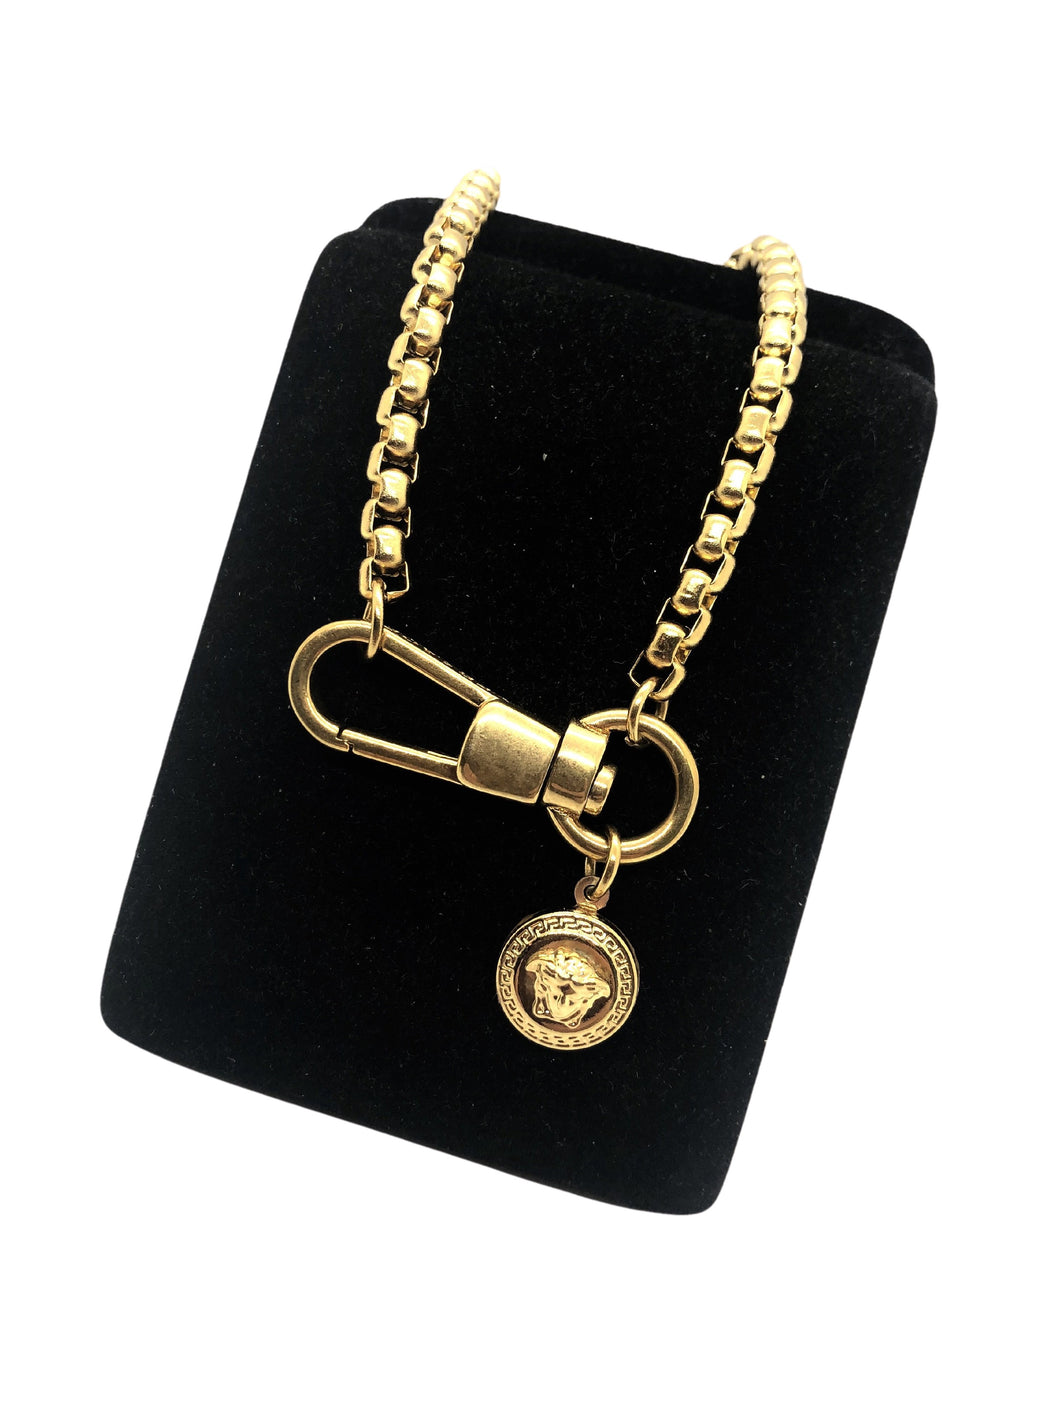 Repurposed Versace Medusa Charm Gold Necklace